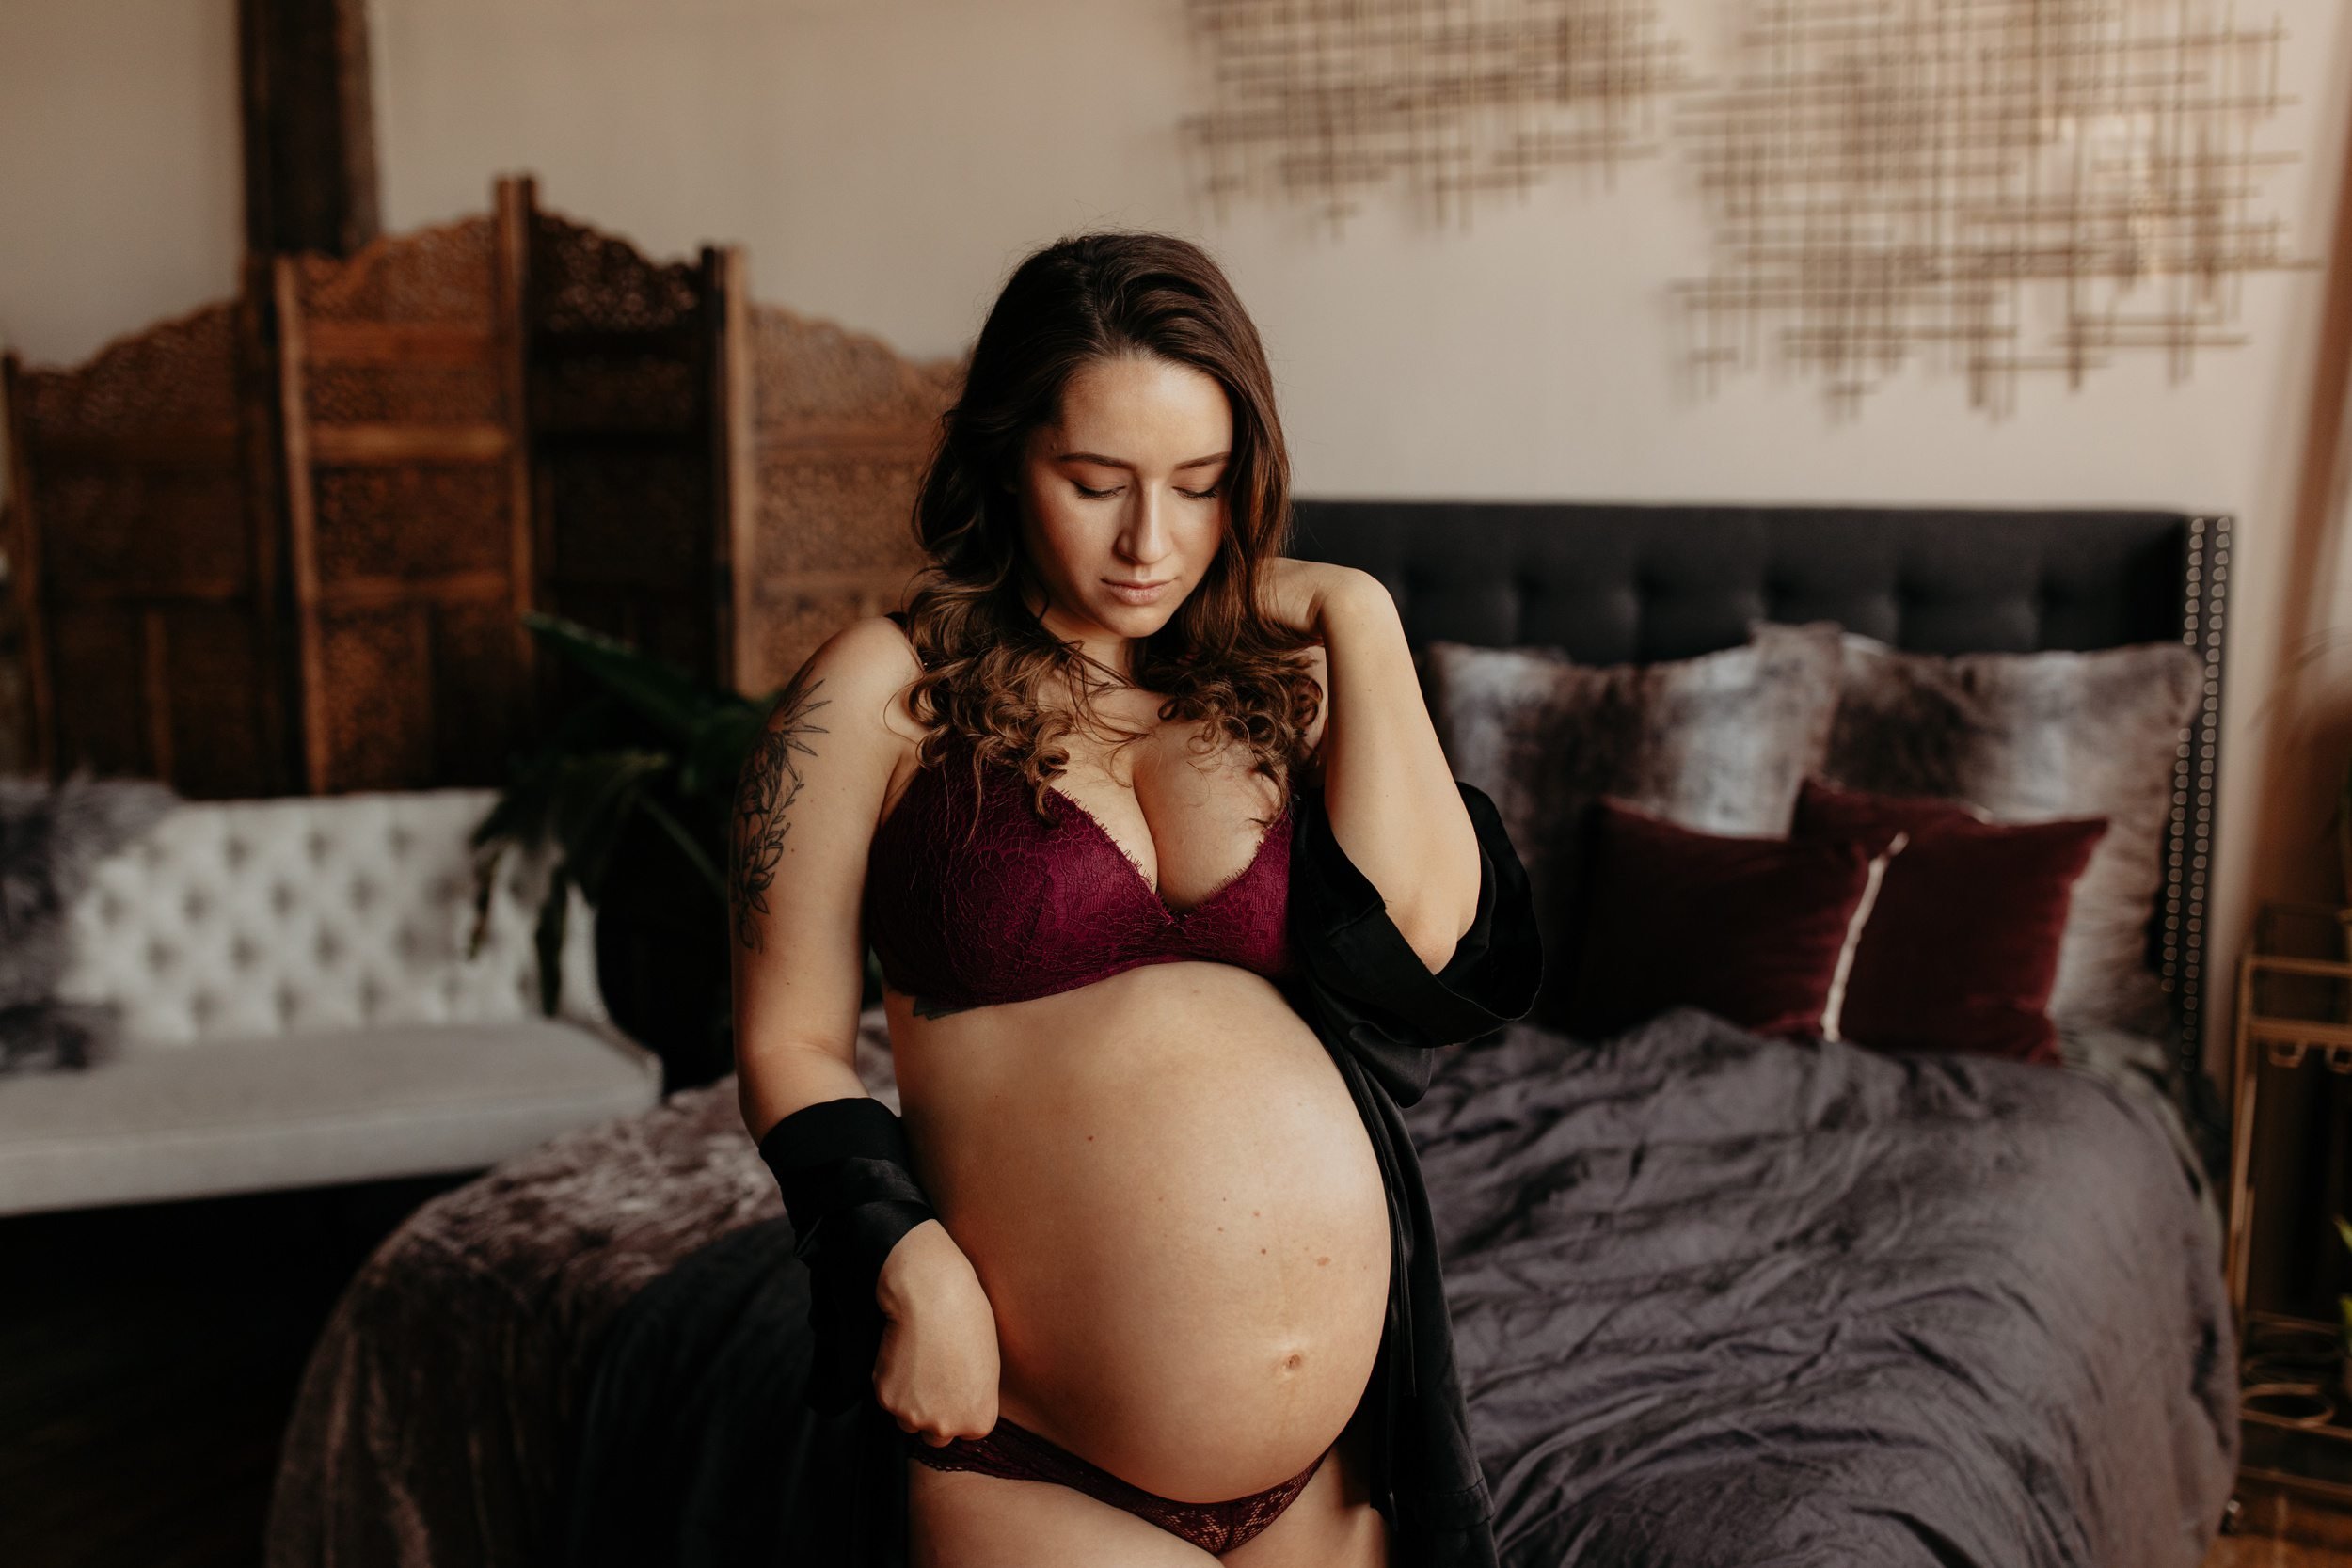 Maternity-Boudoir-Portrait-of-a-Pregnant-Woman-0003.JPG